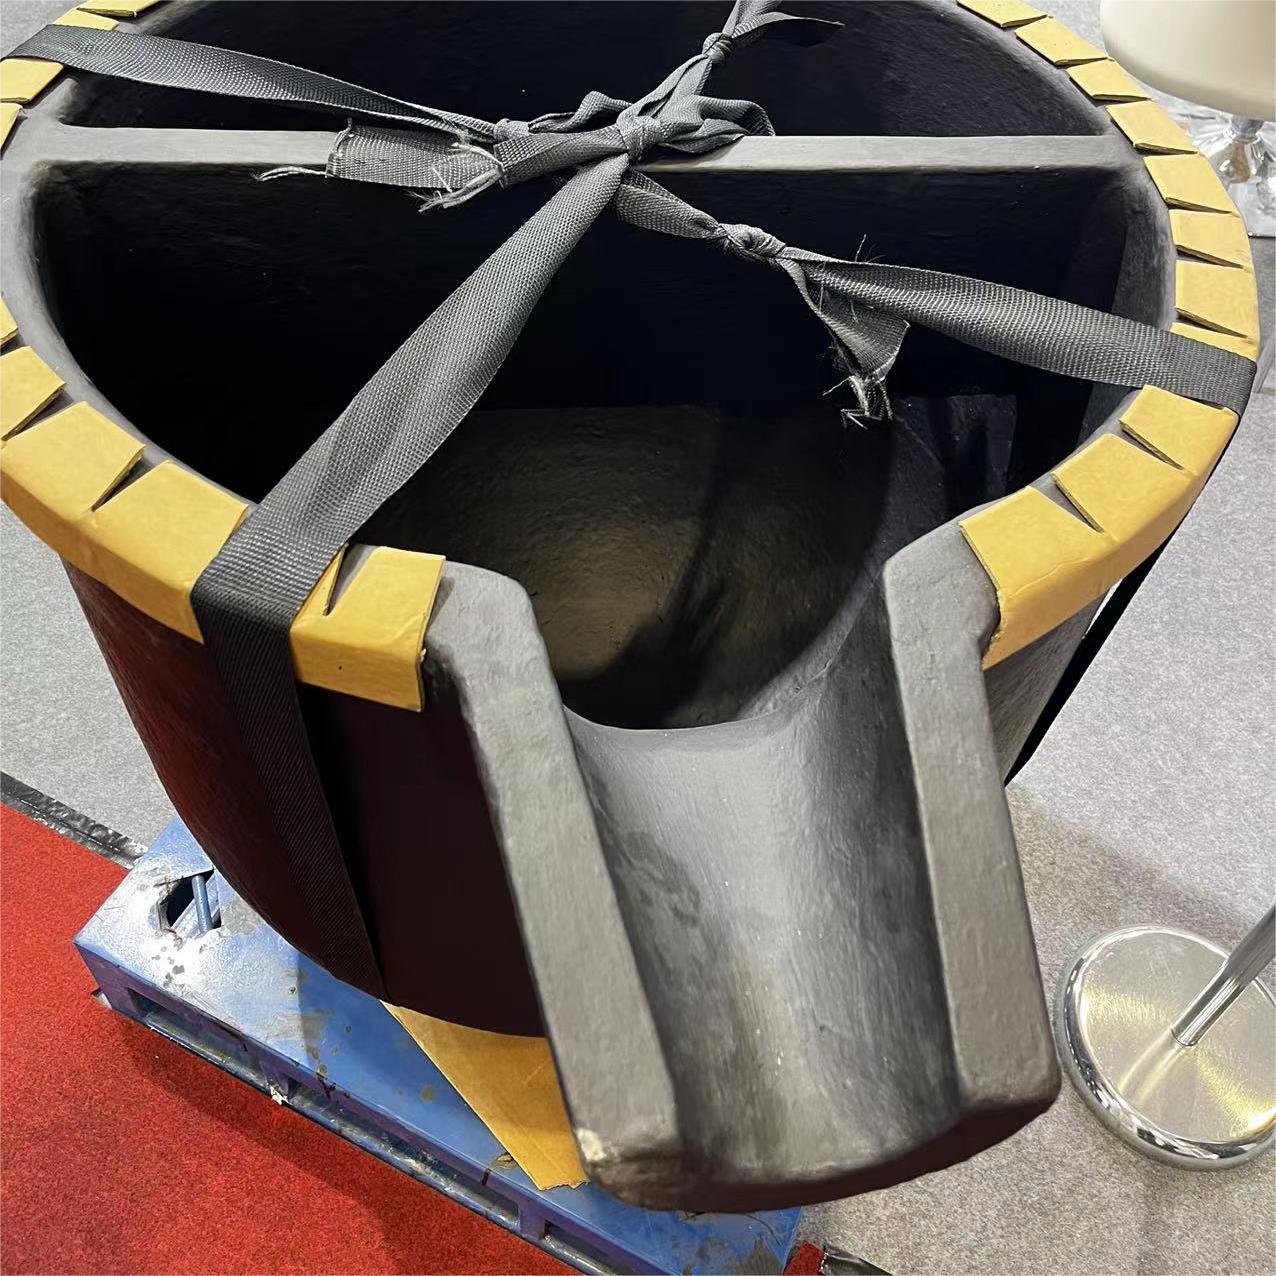 “Breakthrough Materials!” Silicon carbide crucible brings revolutionary smelting experience